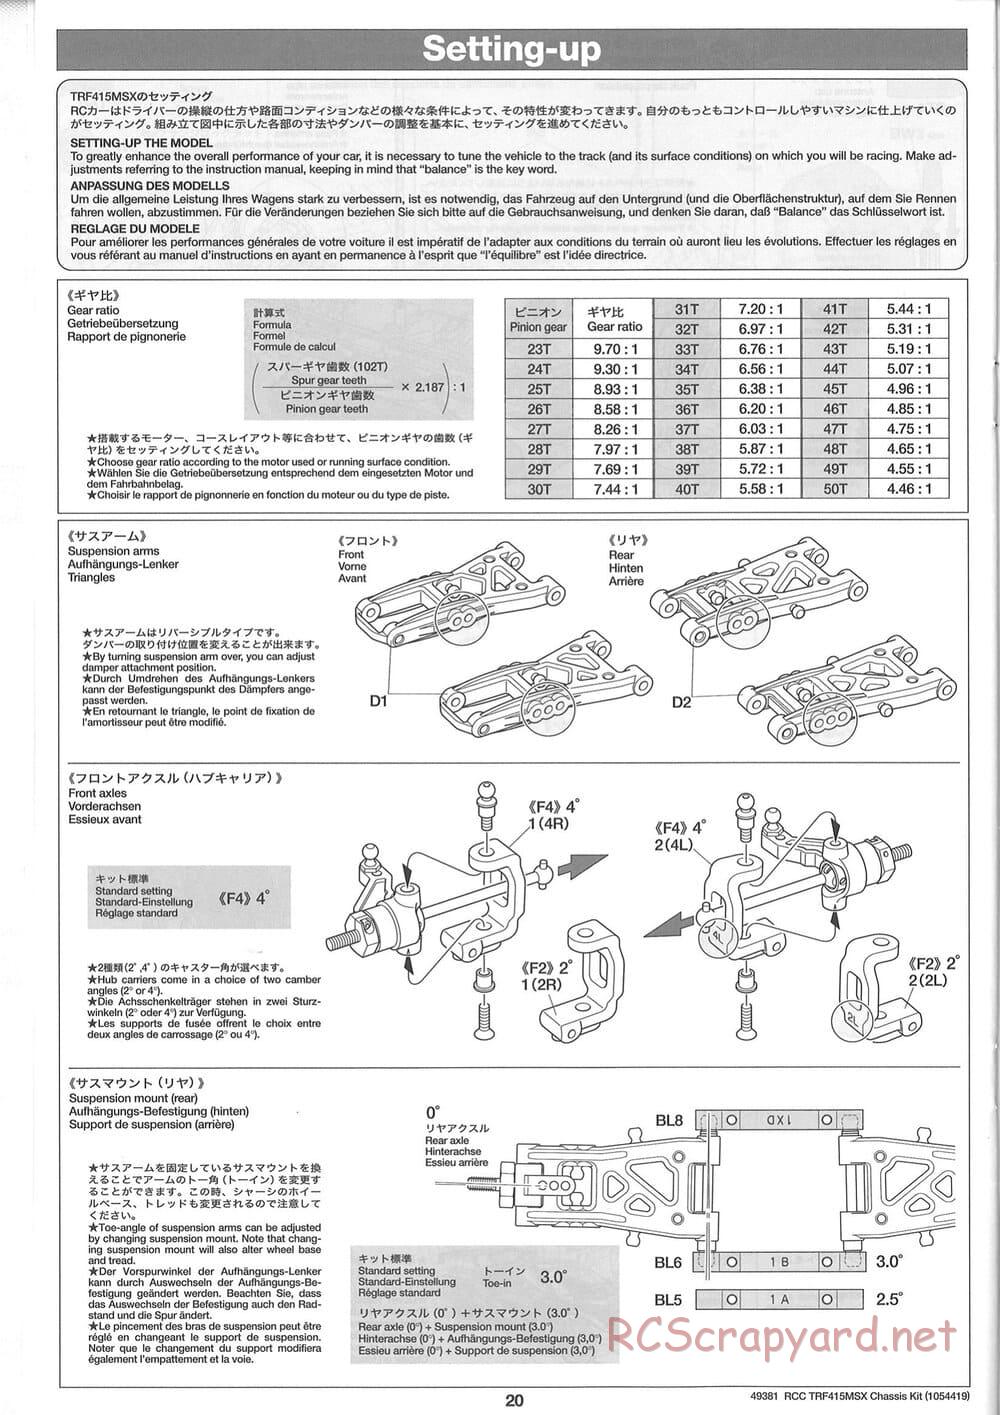 Tamiya - TRF415-MSX Chassis - Manual - Page 20